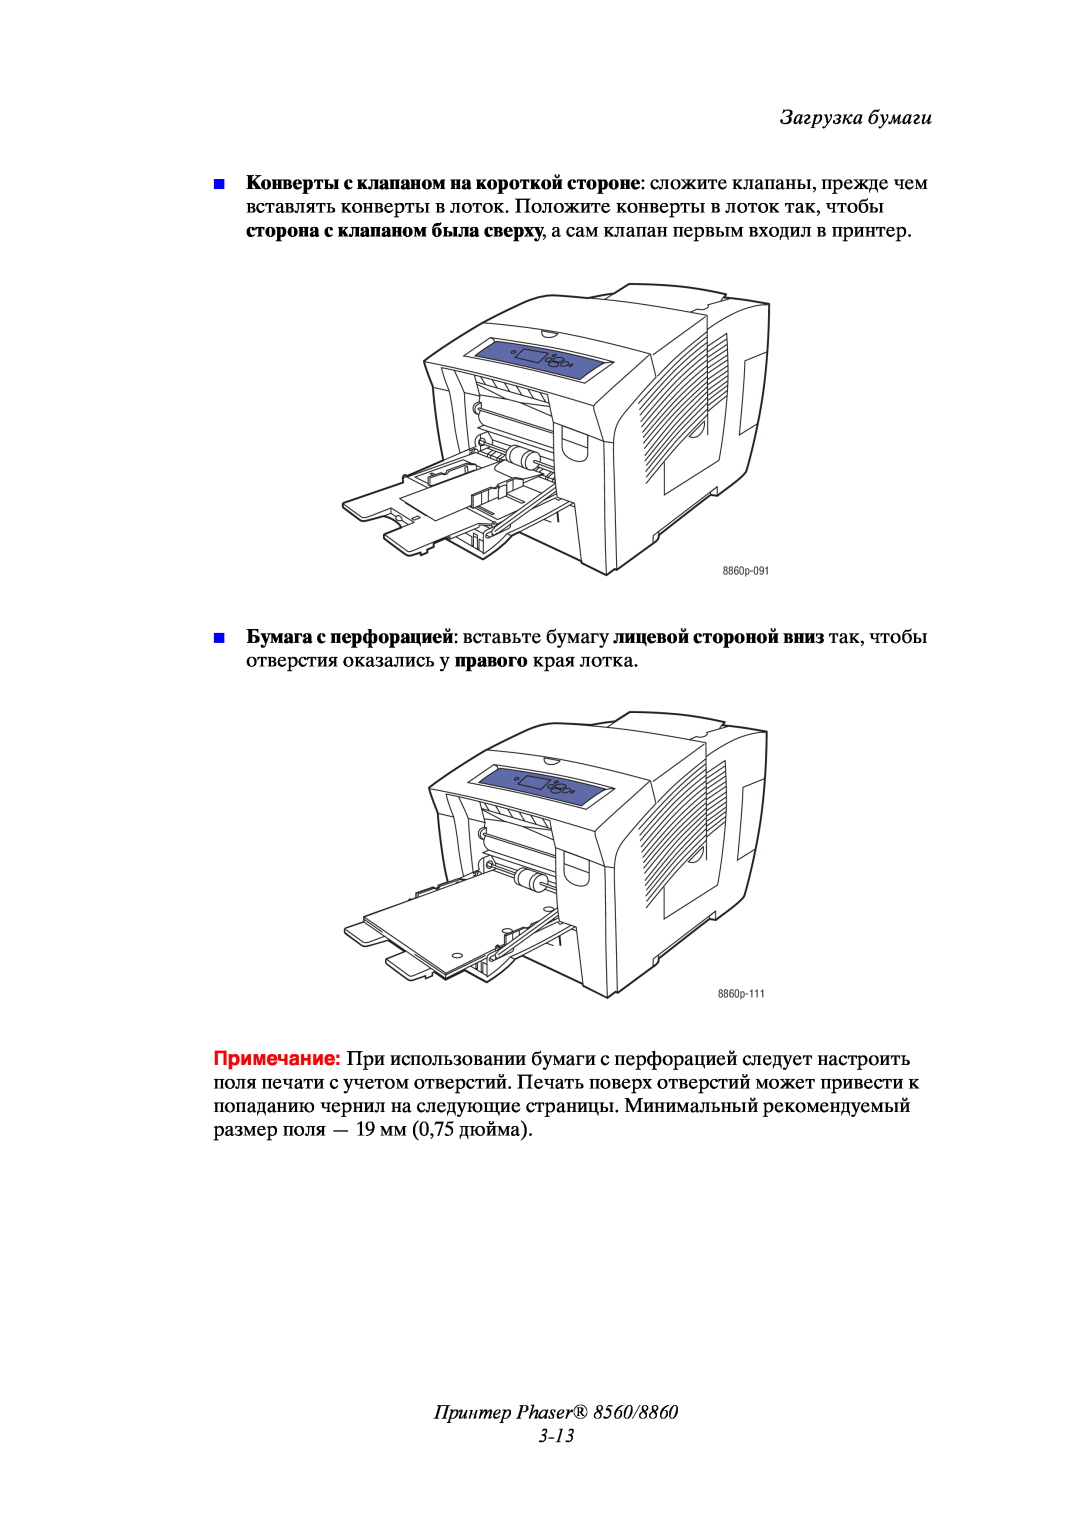 Xerox manual Принтер Phaser 8560/8860 3-13, Загрузка бумаги, 8860p-091, 8860p-111 